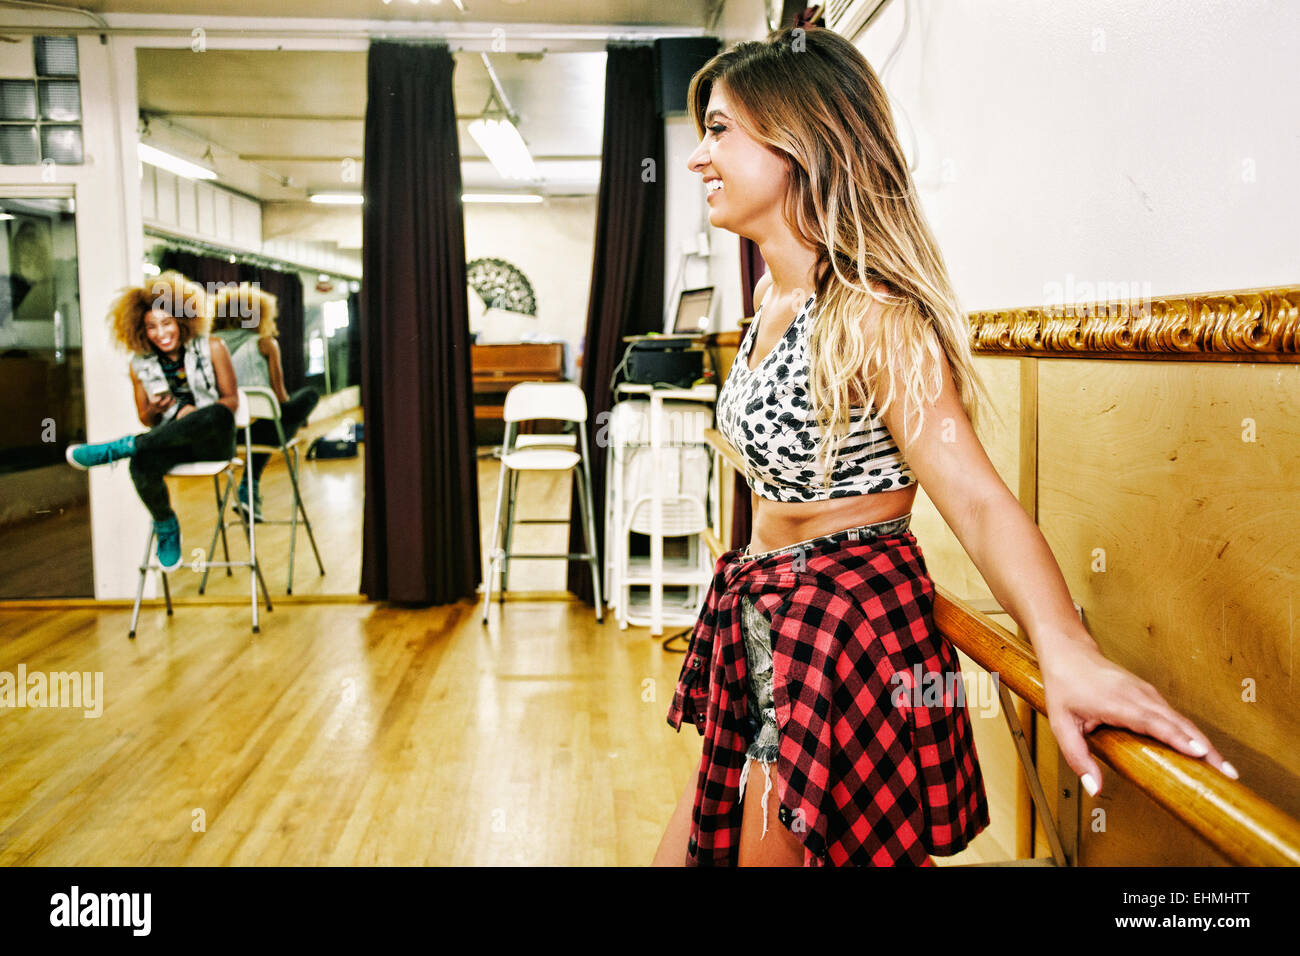 Dancer standing at bar in studio Stock Photo